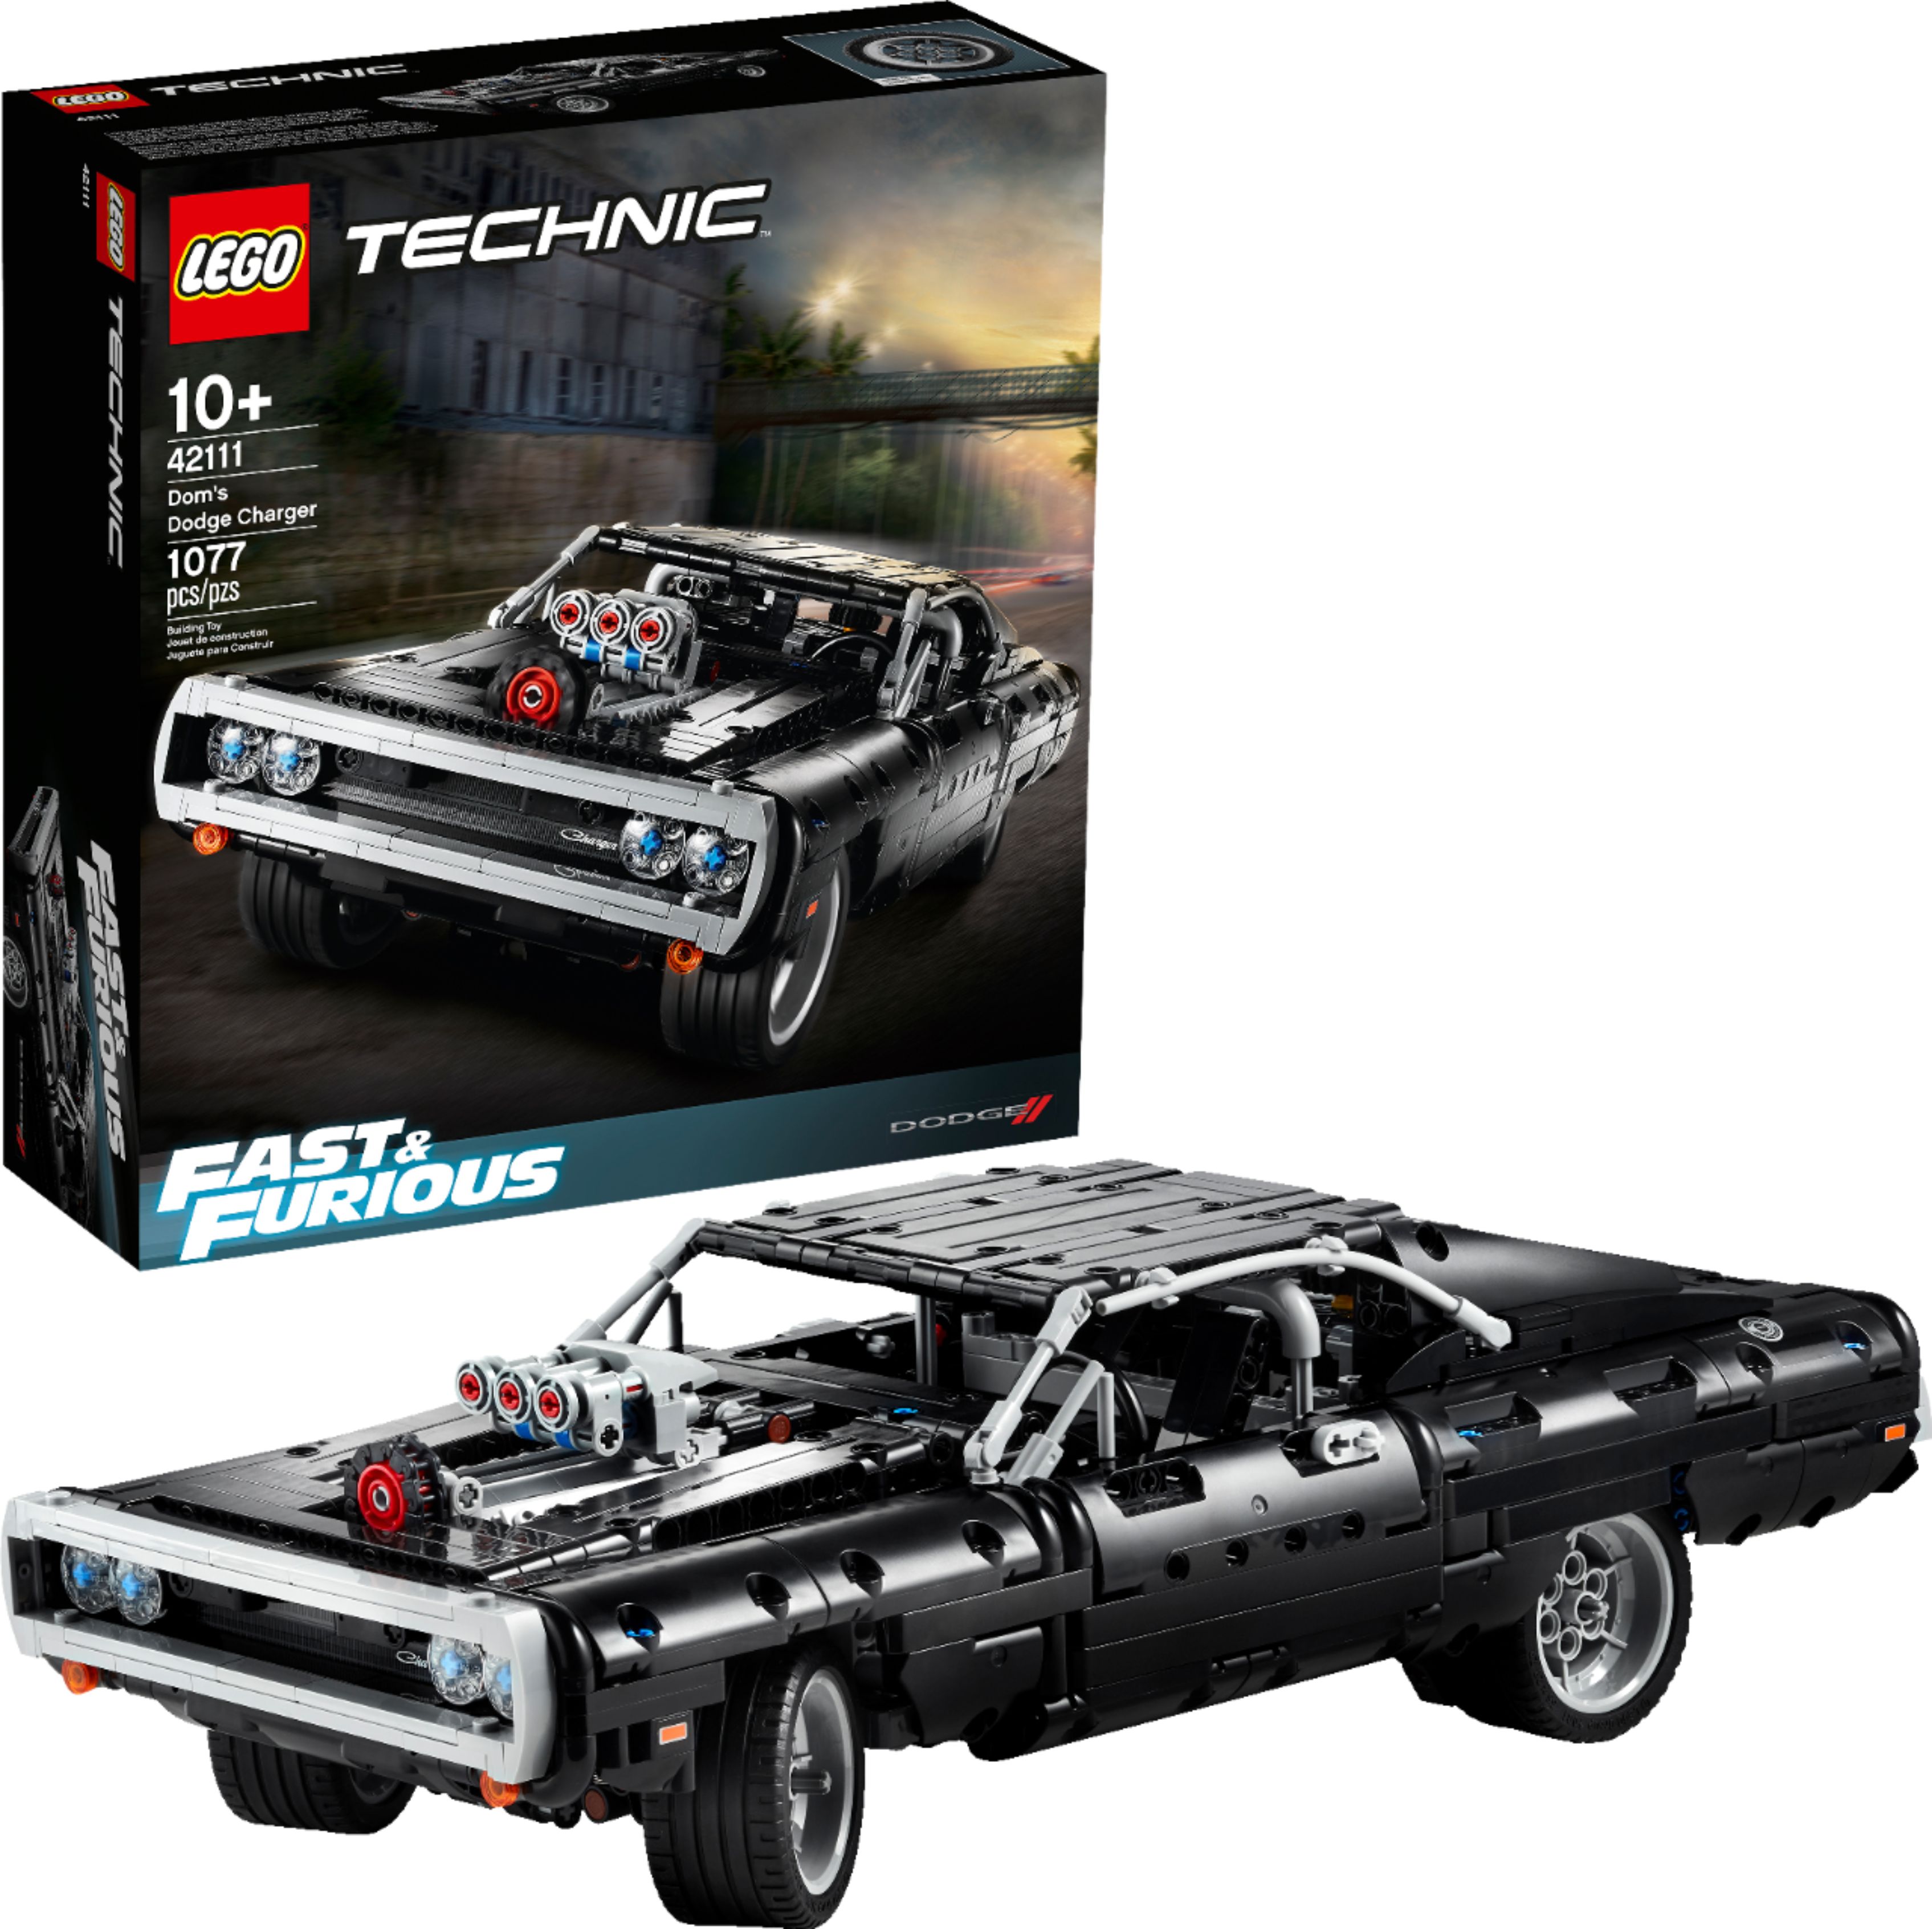 LEGO Technic Fast & Furious Dom's Dodge 42111 Race Building Set (1,077 Pieces) 6288782 - Buy